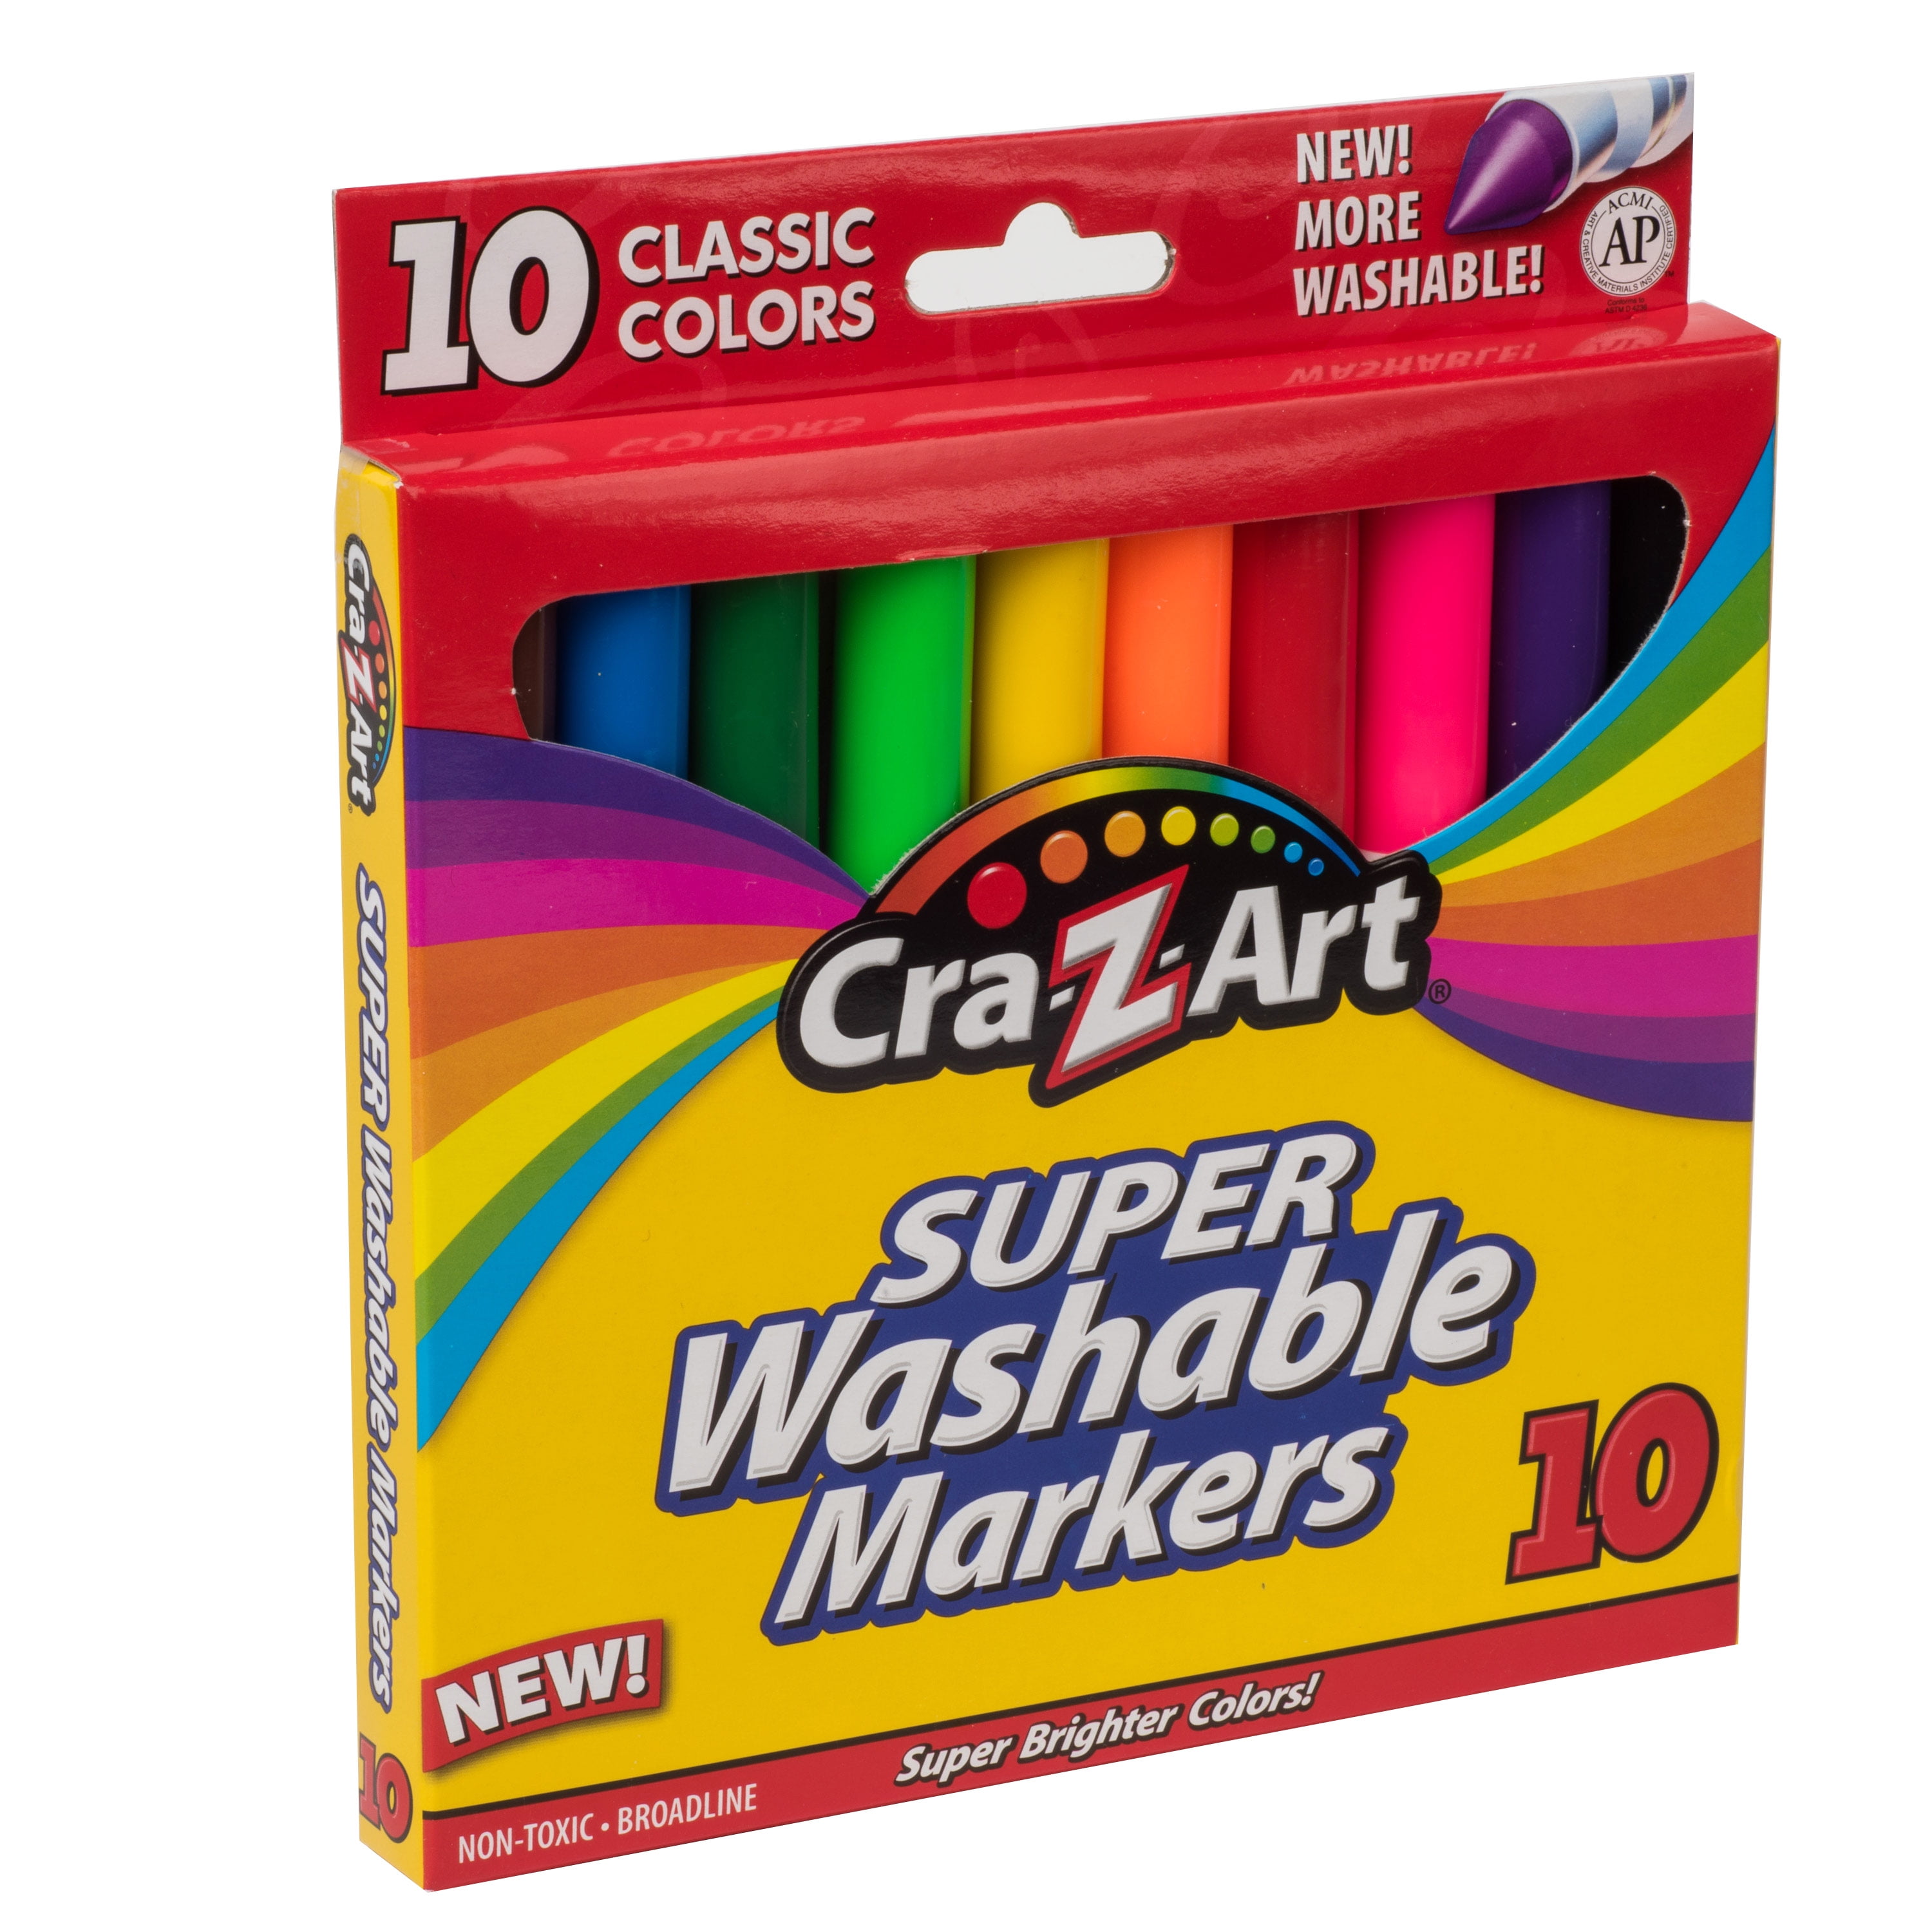 Buy Car-Z-Art Super Washable Marker, 10. washable car markers. 